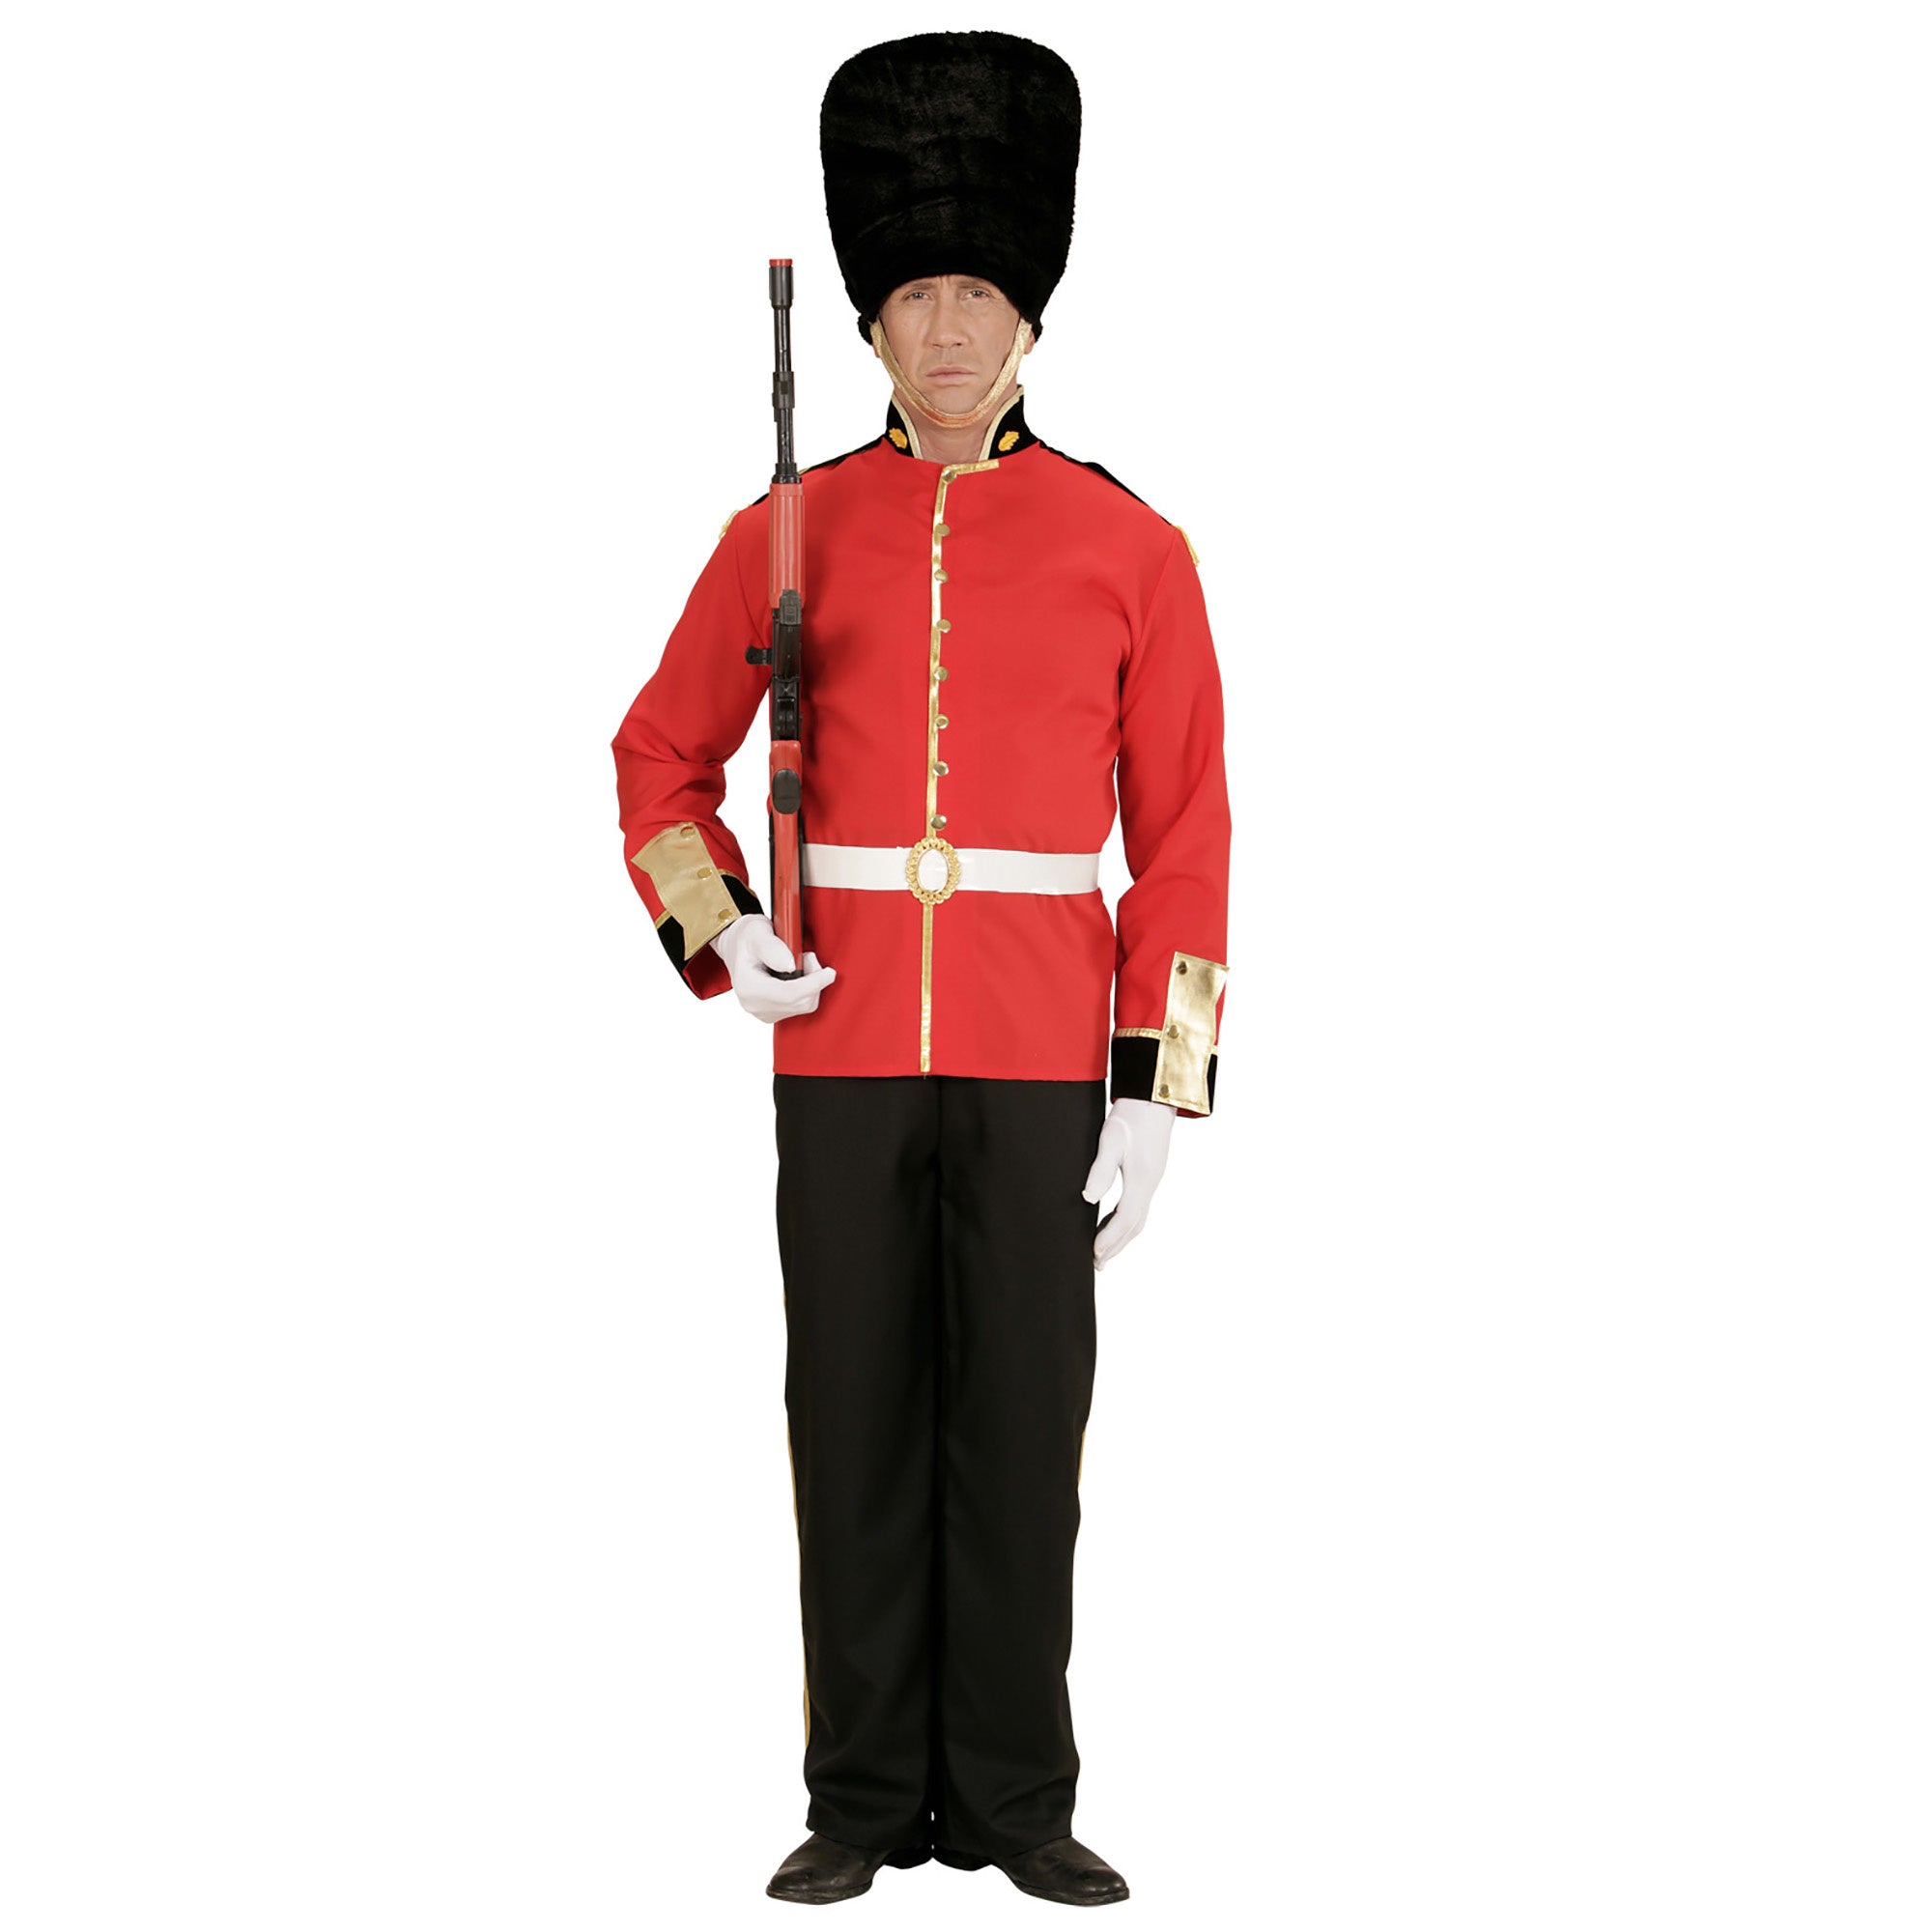 Widmann - Politie & Detective Kostuum - Beefeater Royal Guard - Man - rood - Large - Carnavalskleding - Verkleedkleding